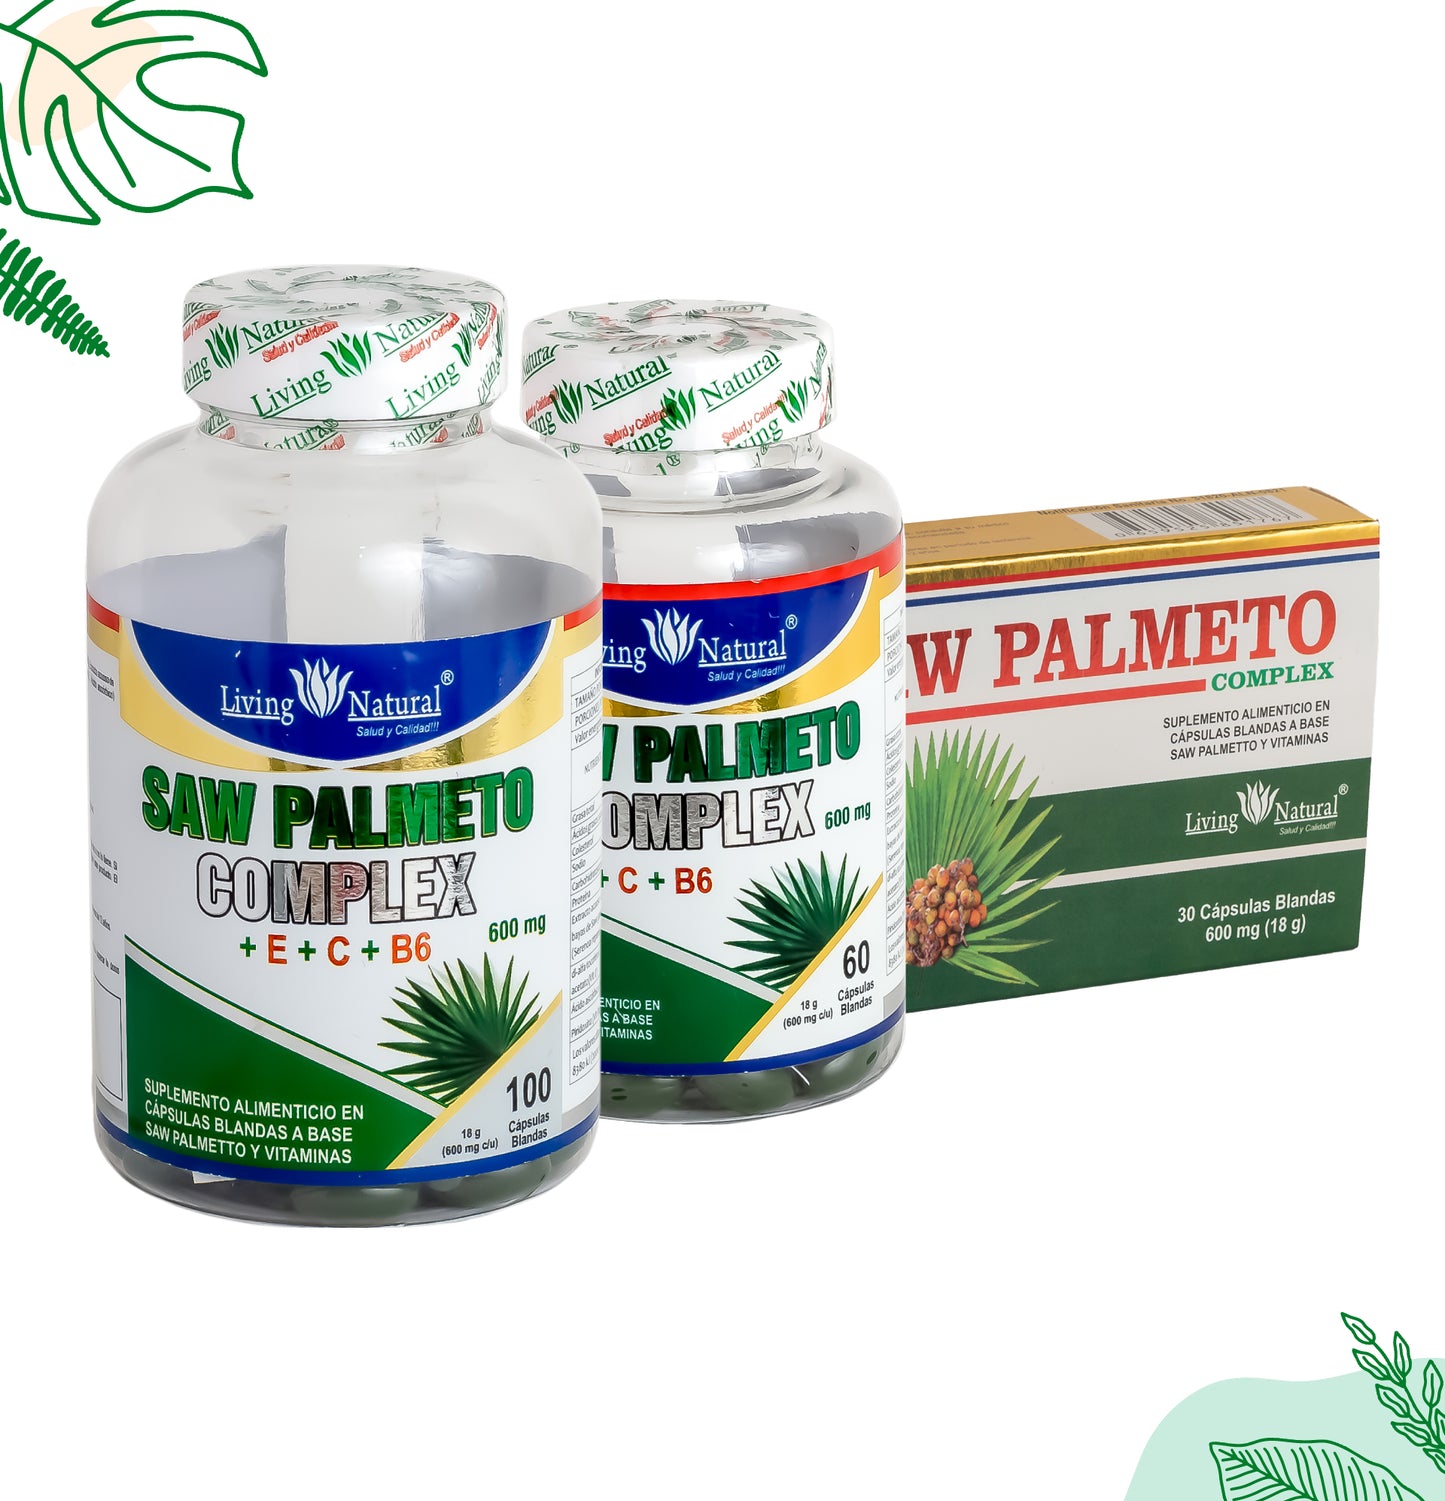 SAW PALMETO | 30X, 60X, 100X | 600 mg